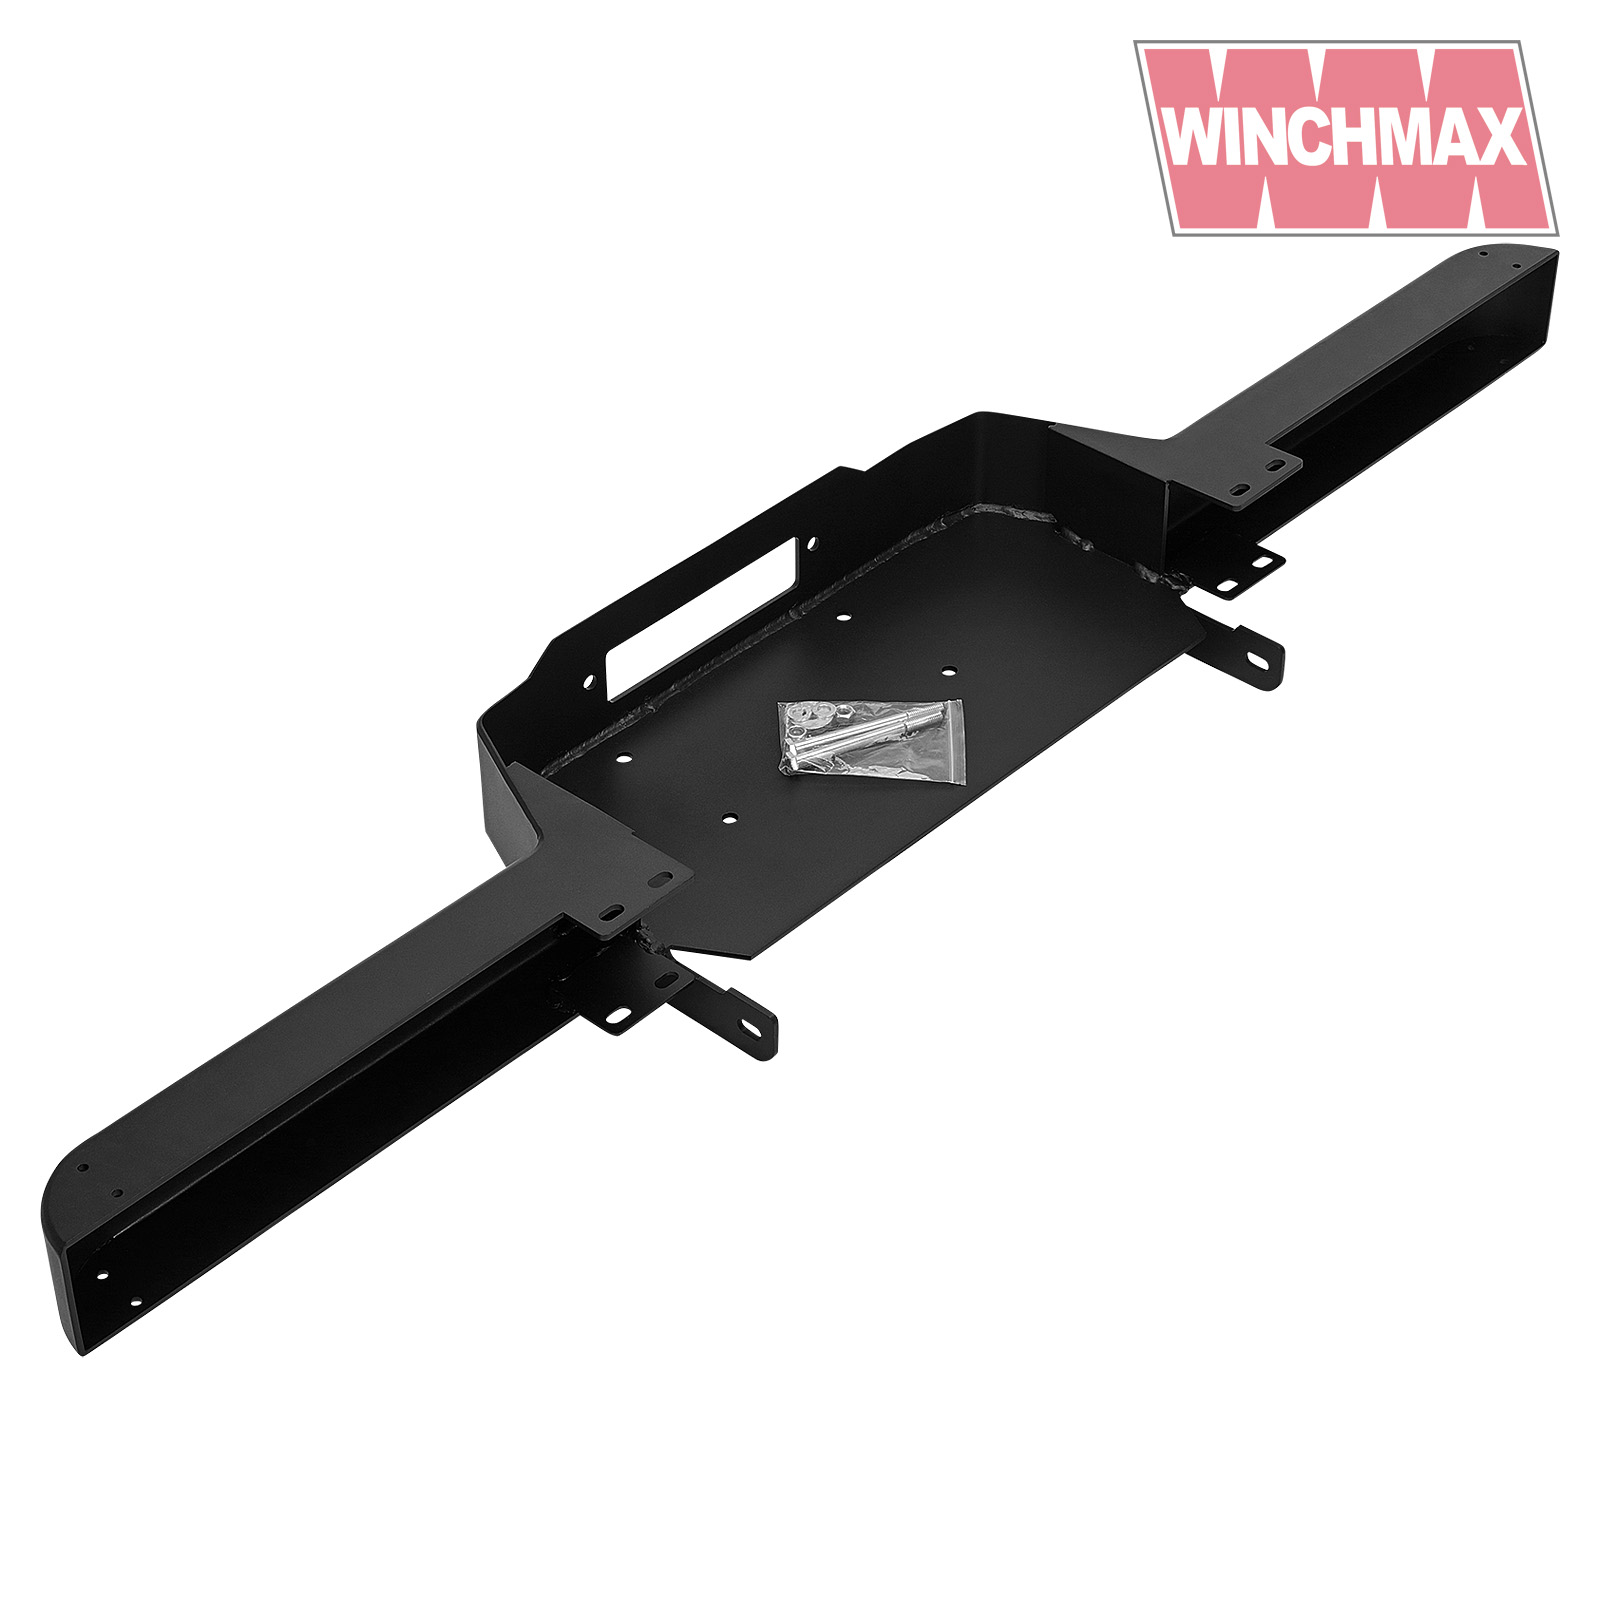 WINCHMAX Winch Bumper. 5mm Thick Powder Coated in Graphite Black.